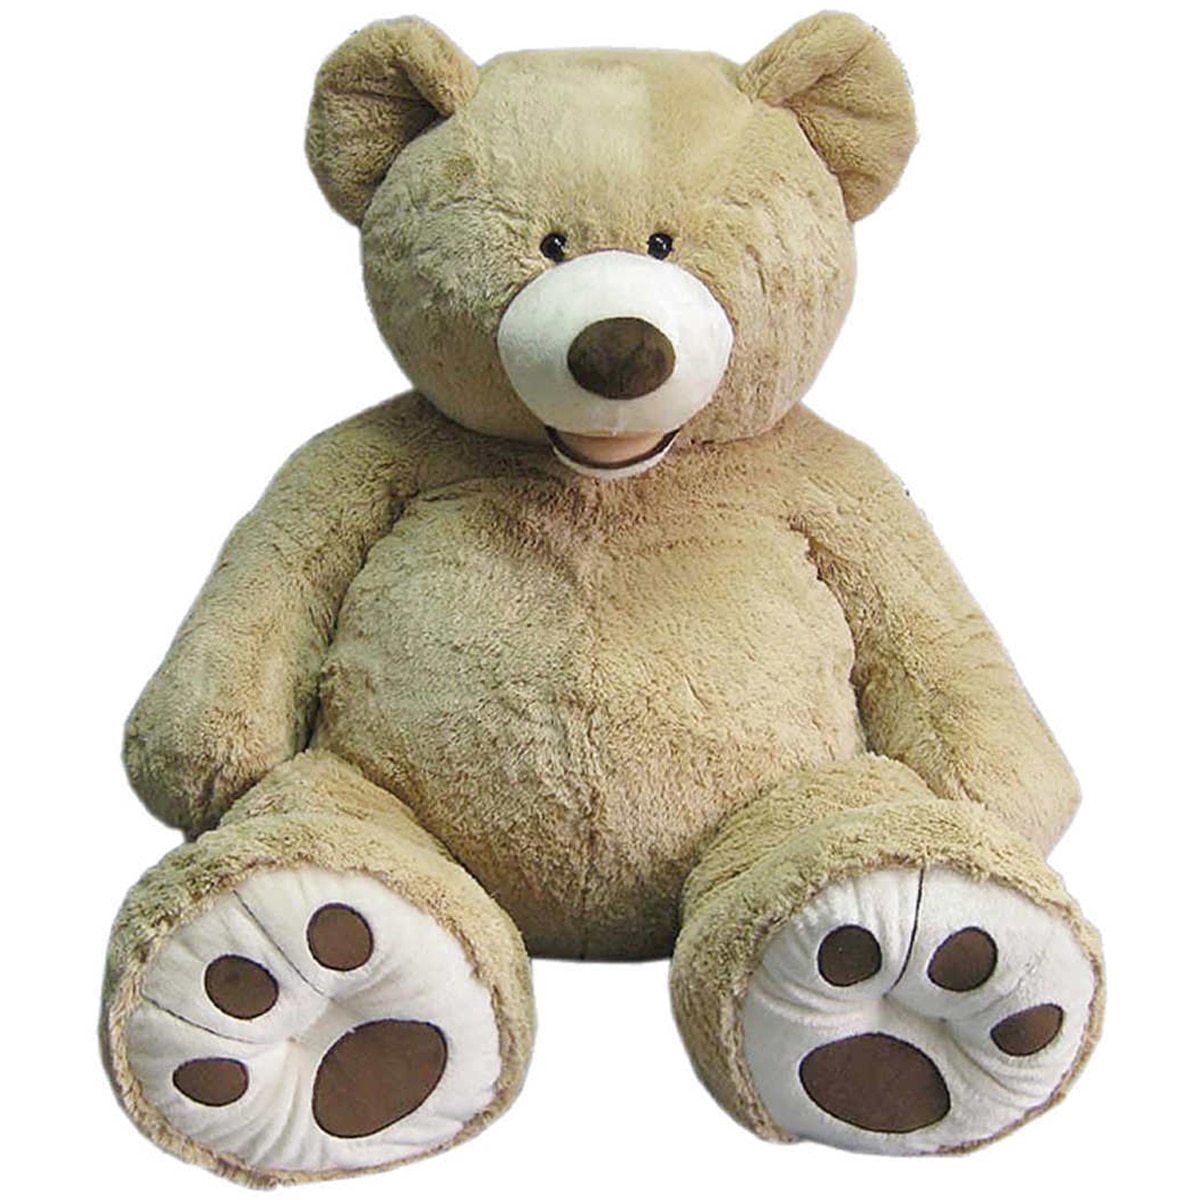 costco giant stuffed bear